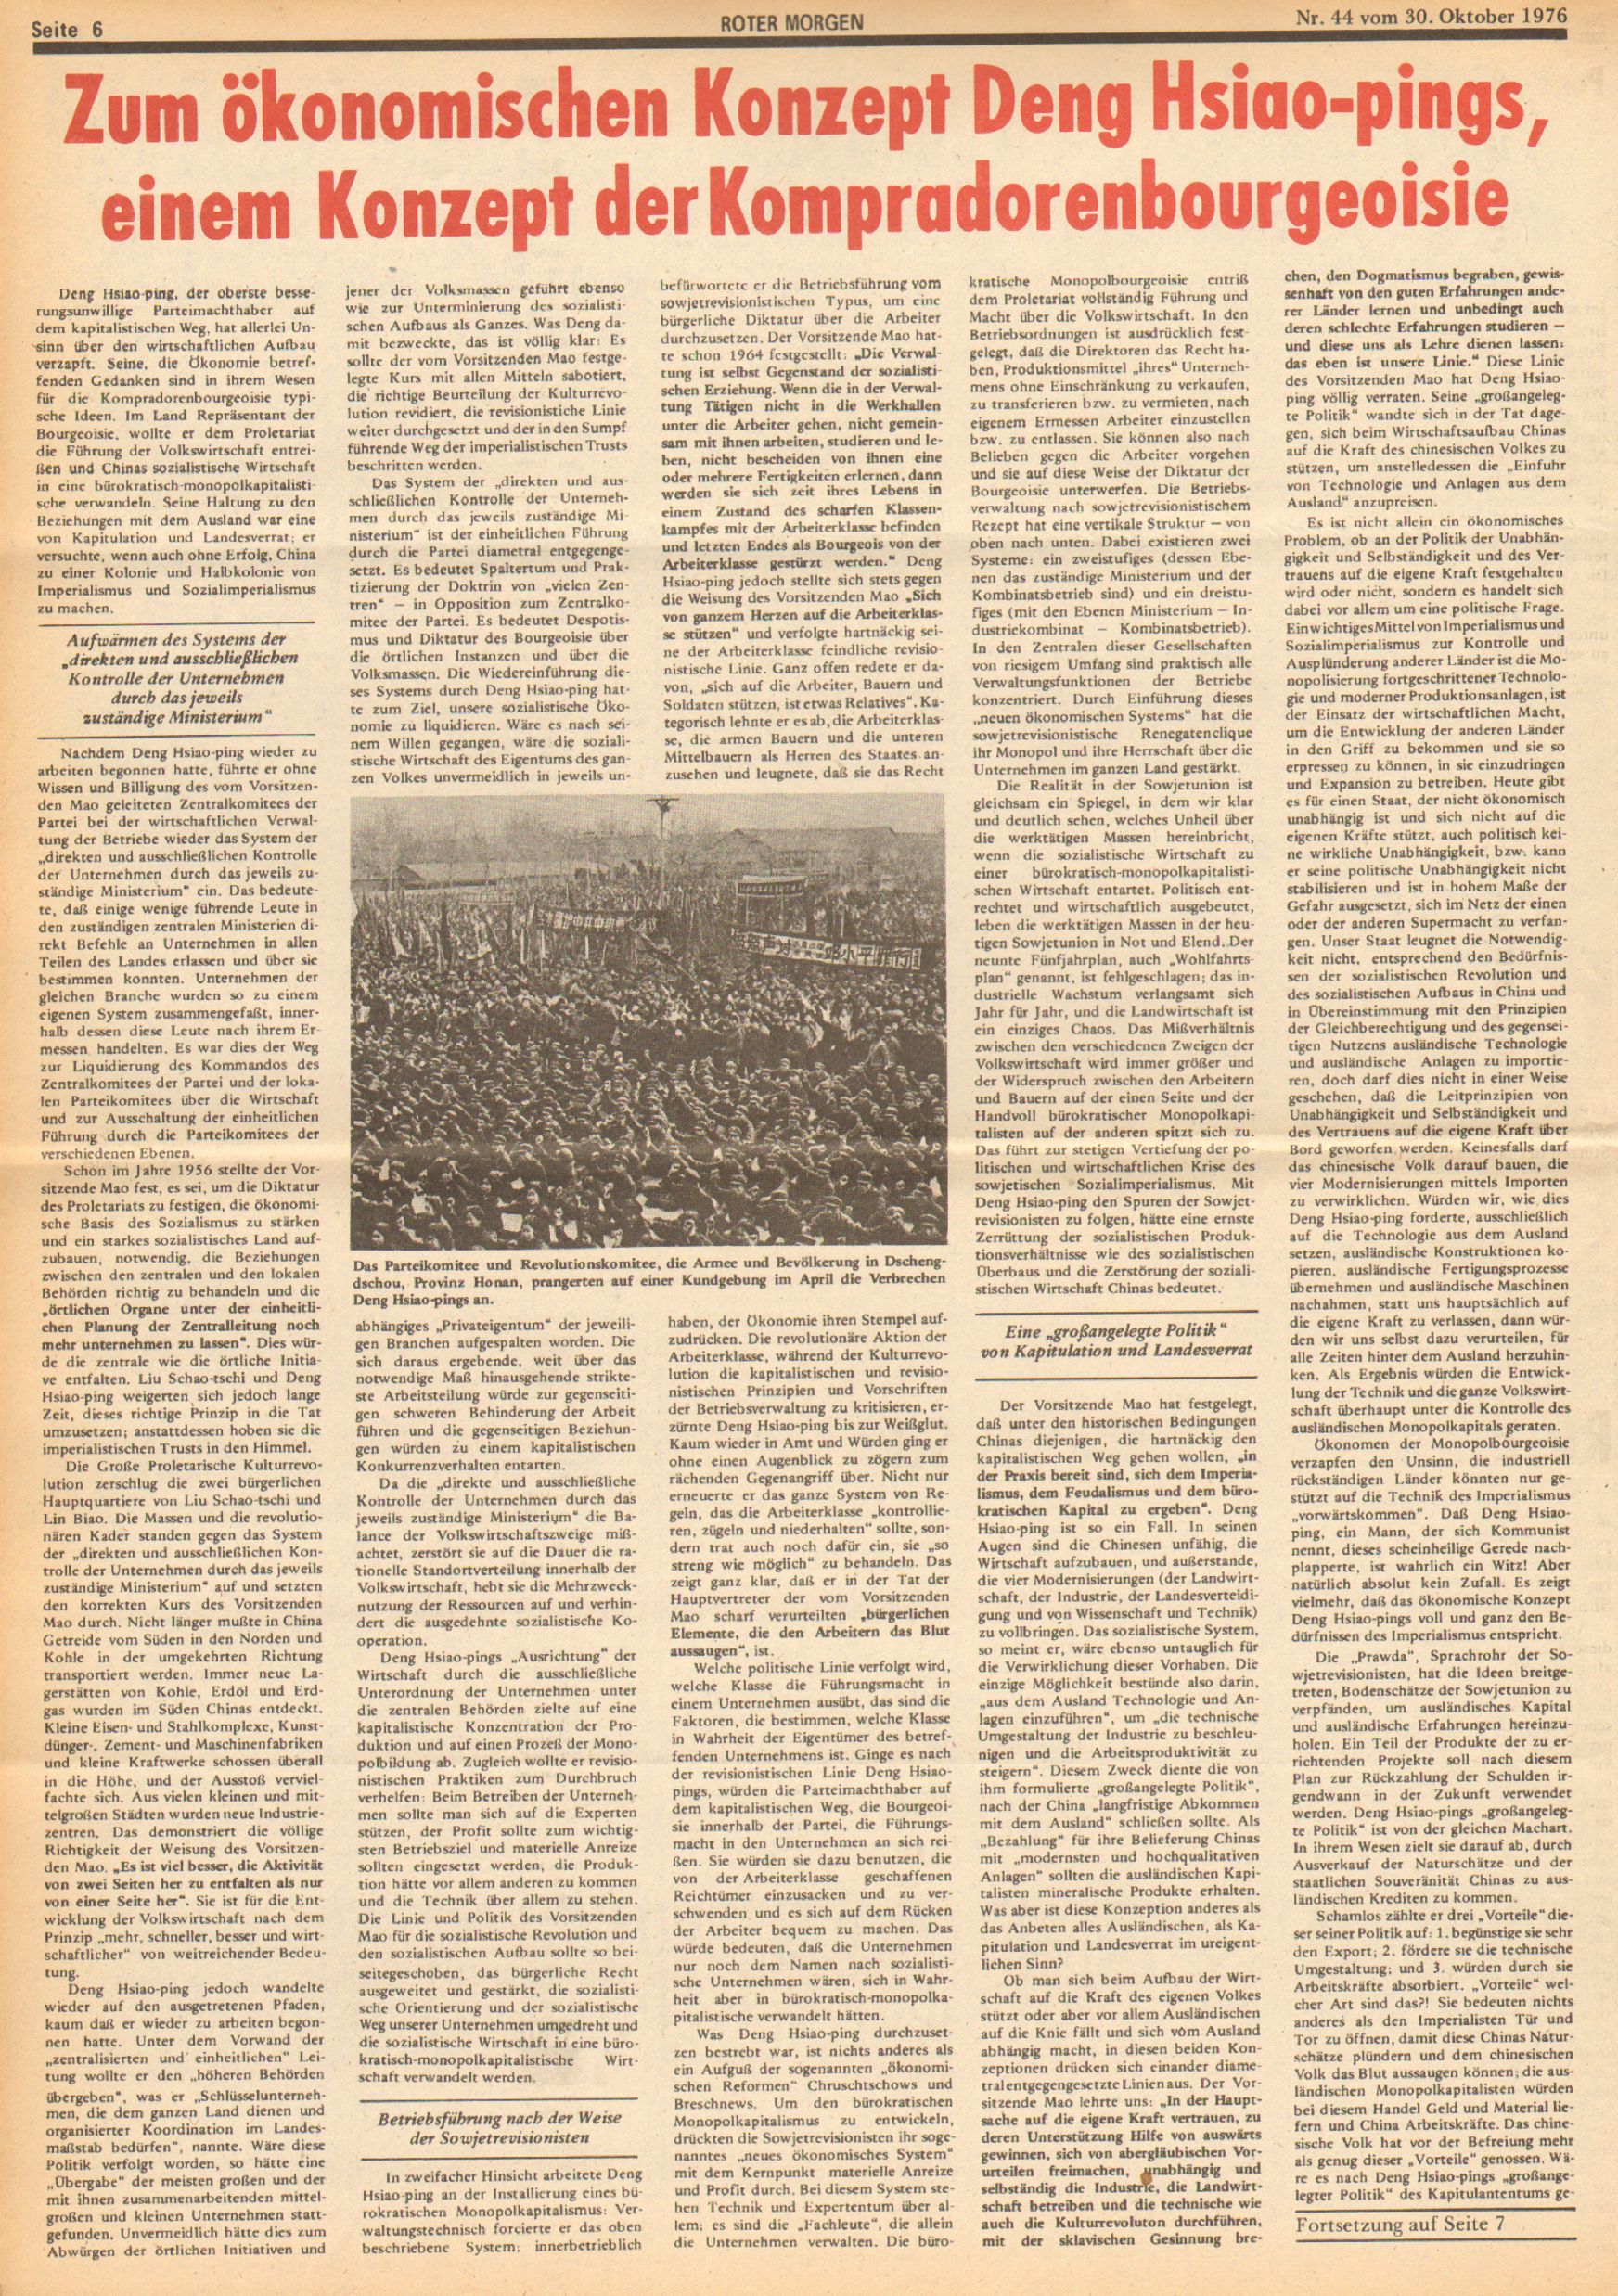 Roter Morgen, 10. Jg., 30. Oktober 1976, Nr. 44, Seite 6